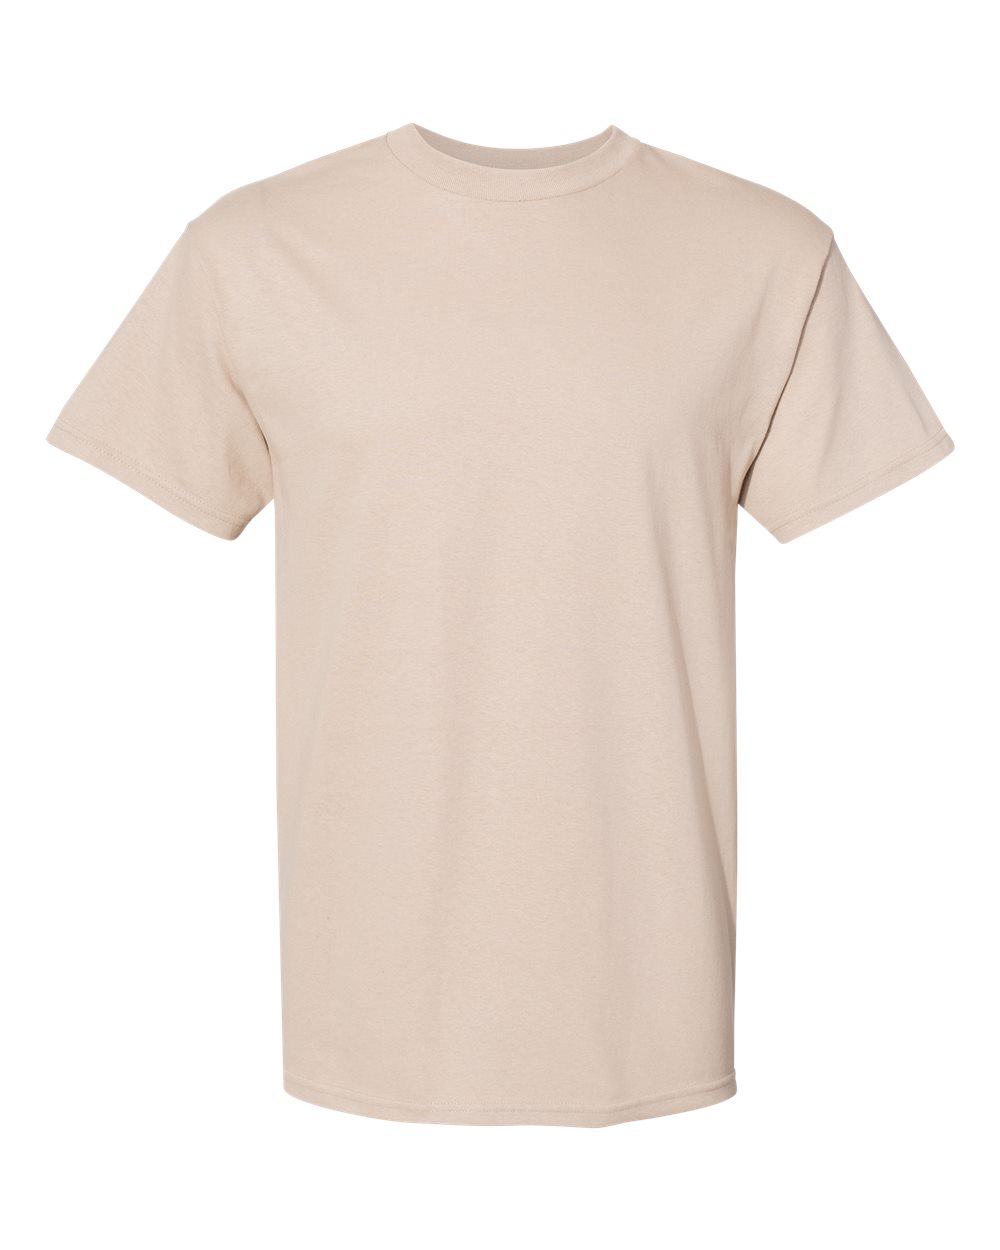 ALSTYLE Mens Cotton Blank Heavyweight Short Sleeve Tee T Shirts 1901 up ...